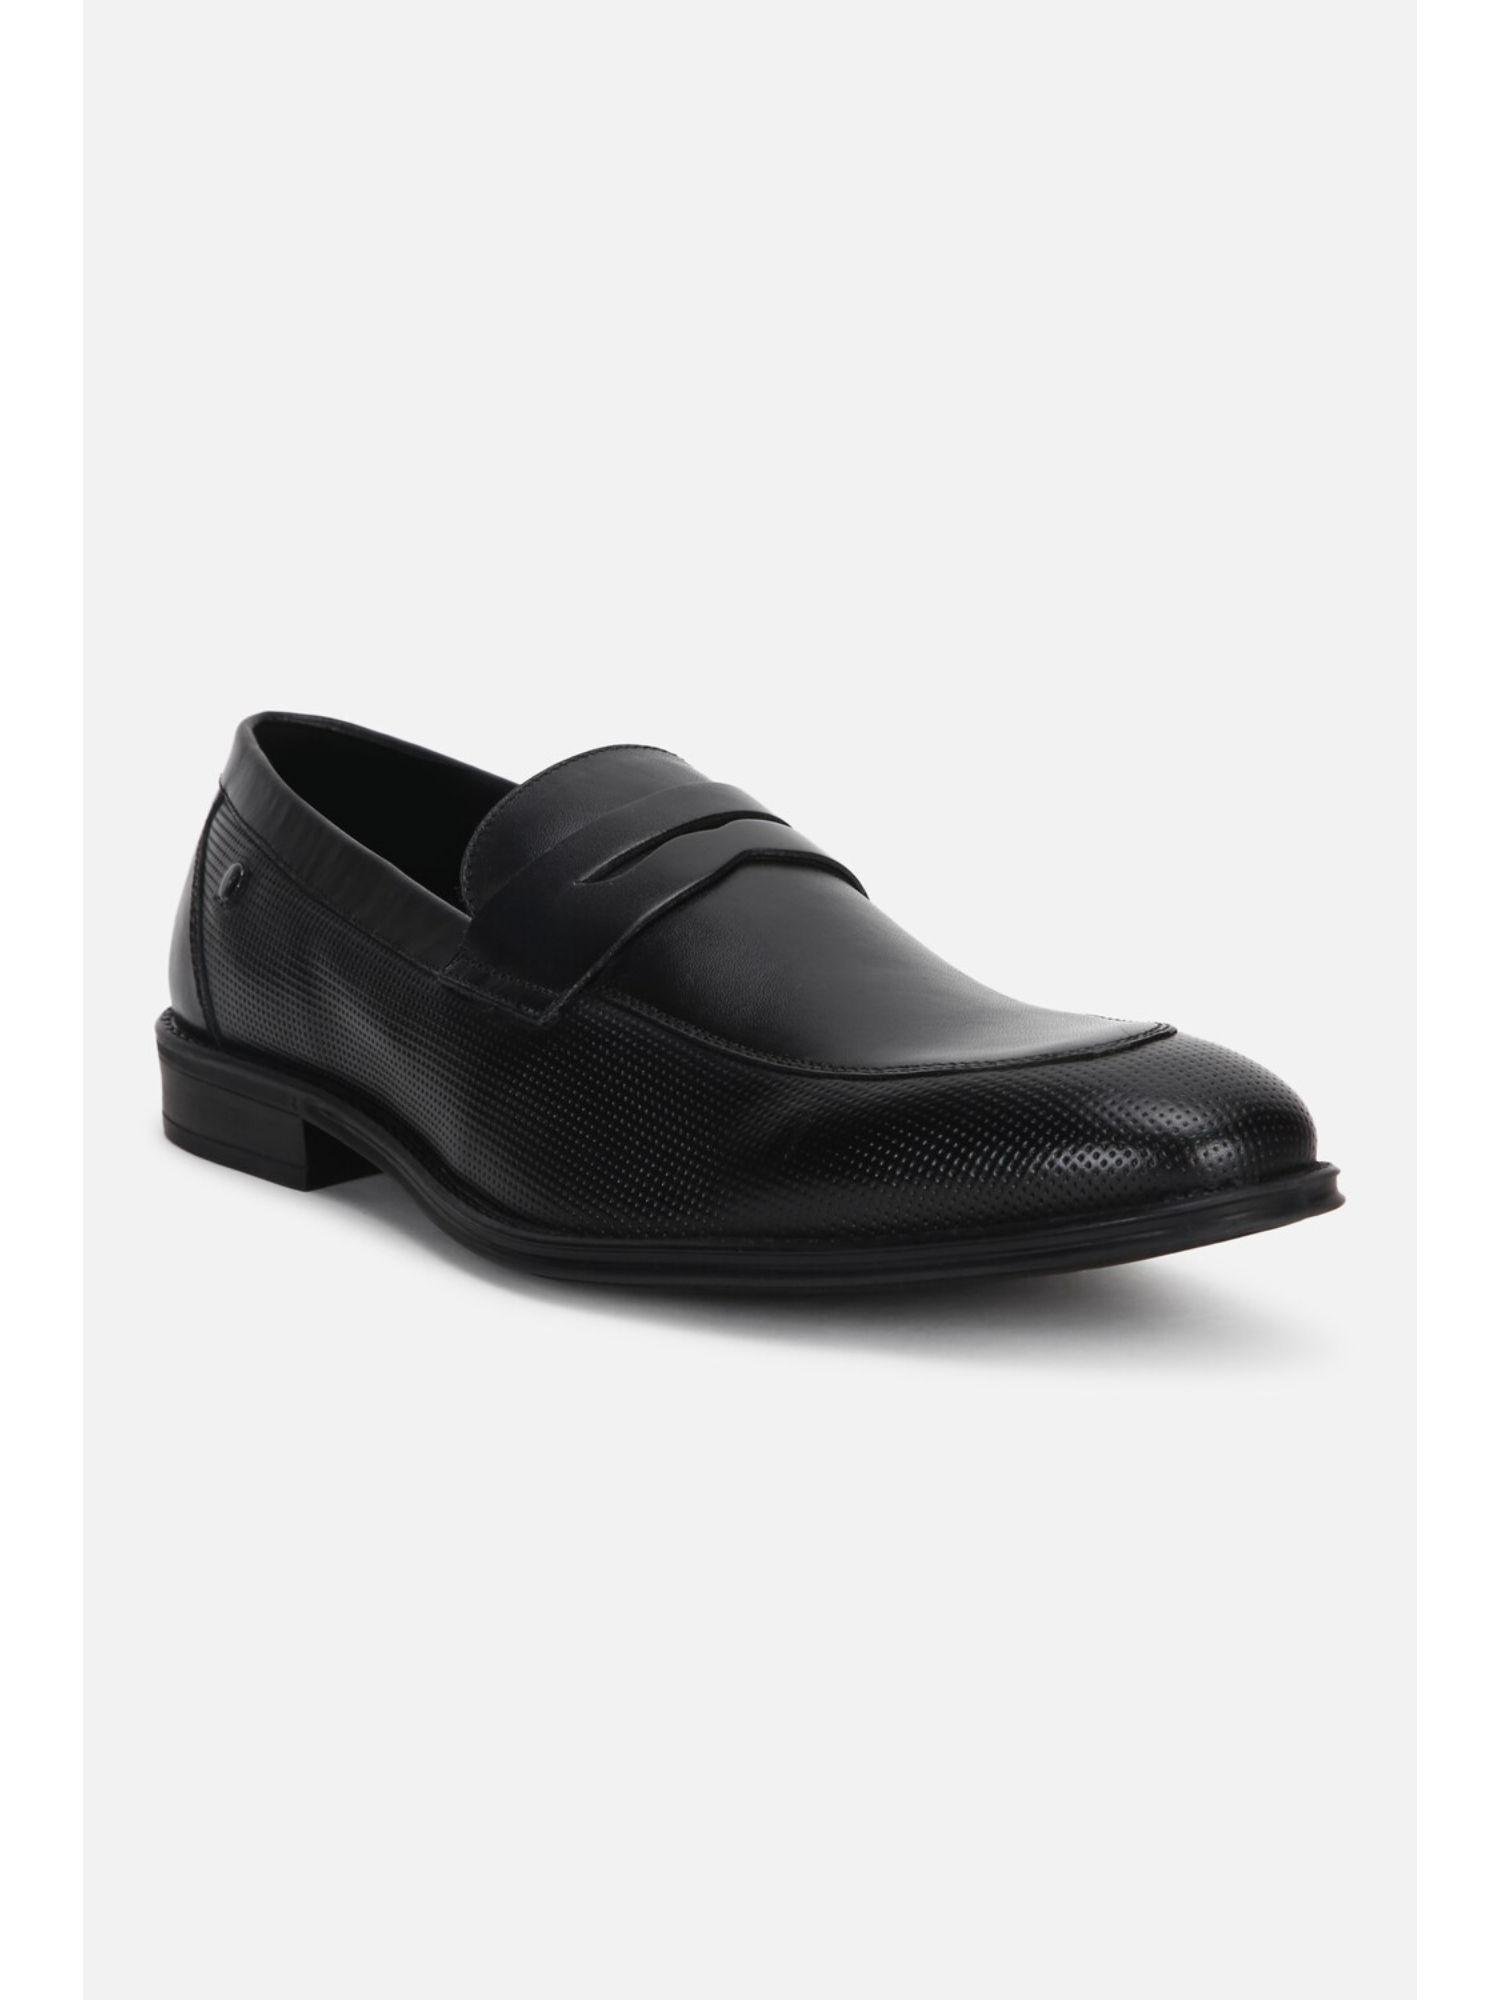 men-black-slip-ons-loafers